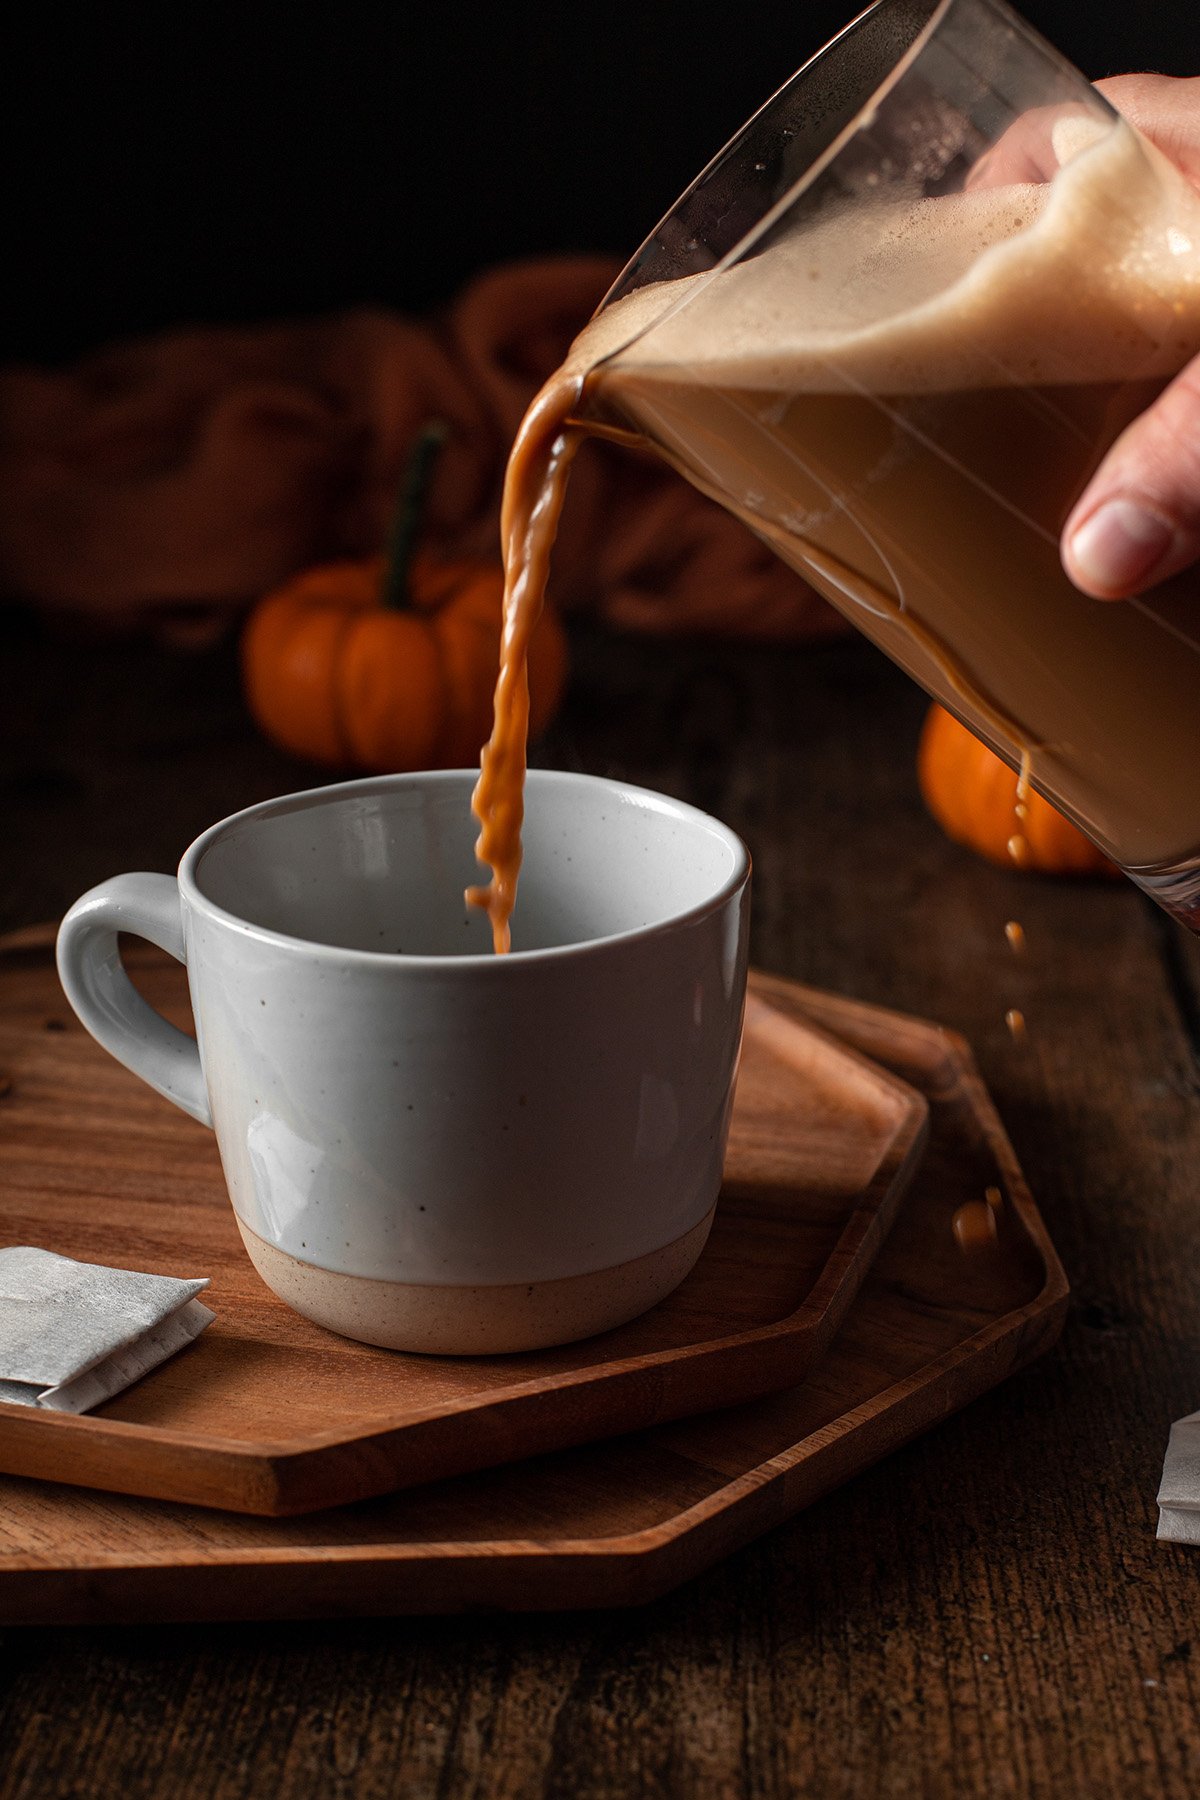 chai being poured into a mug.